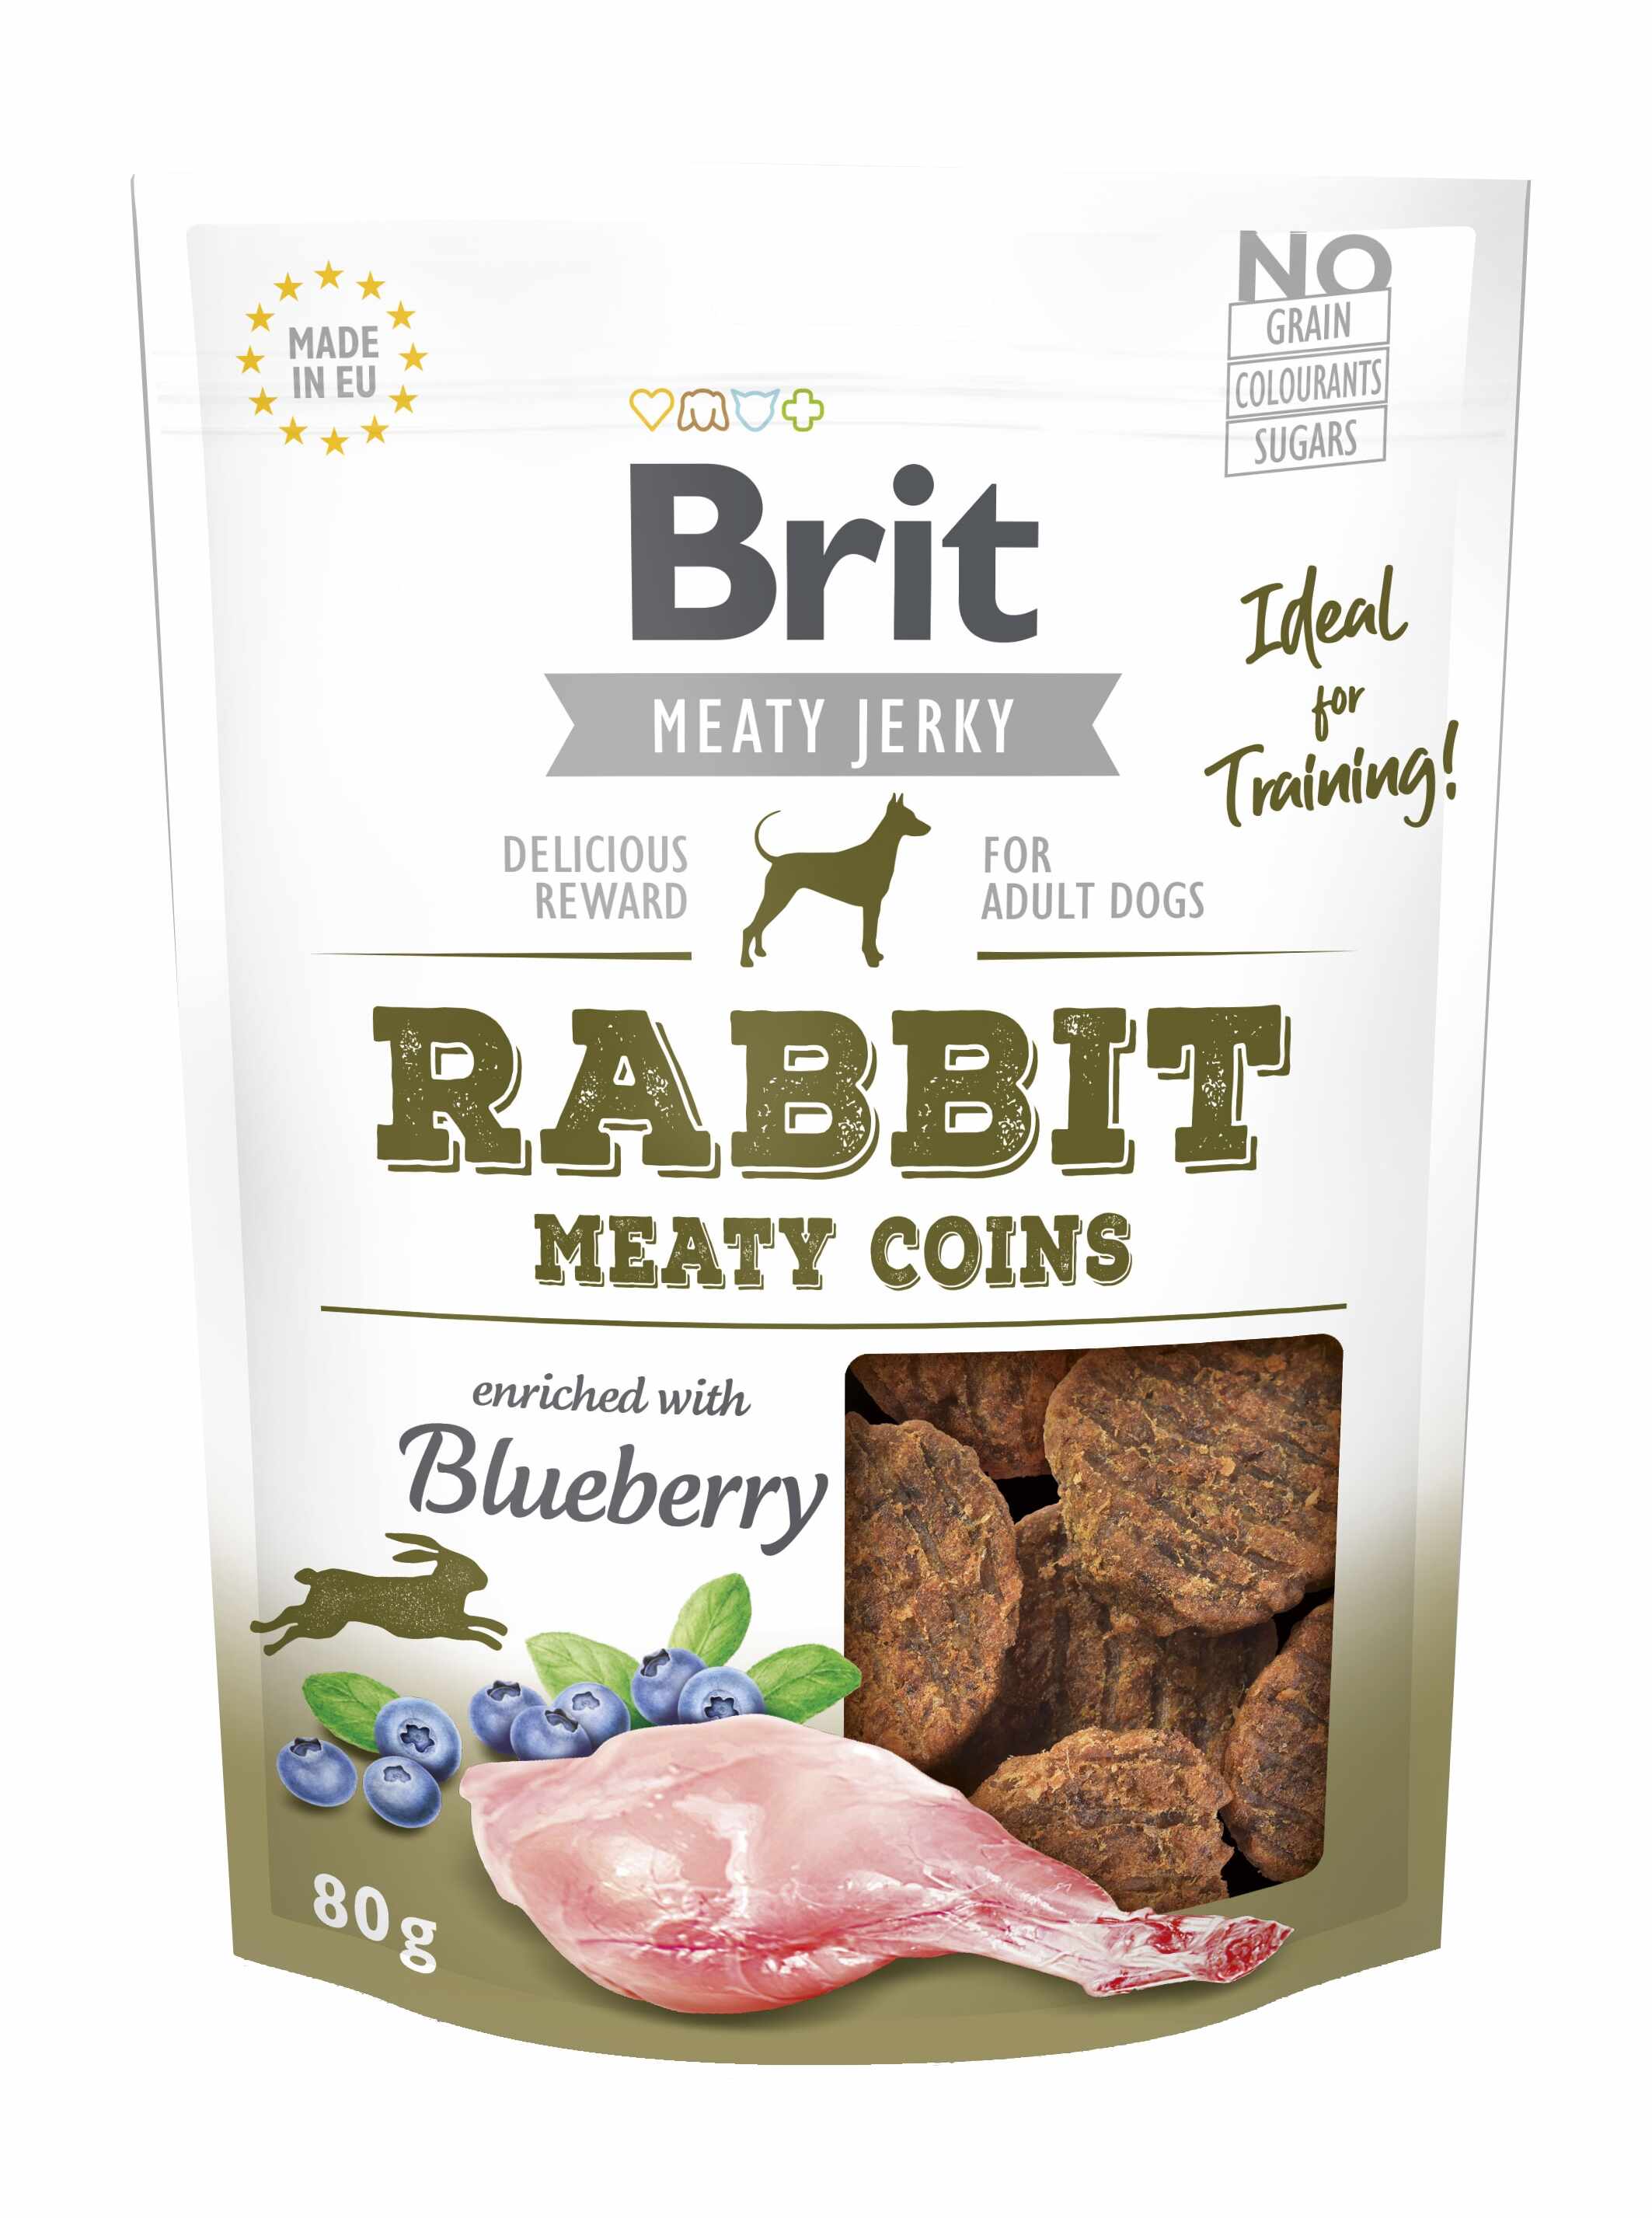 Brit Dog Jerky Rabbit Meaty Coins, 80 g